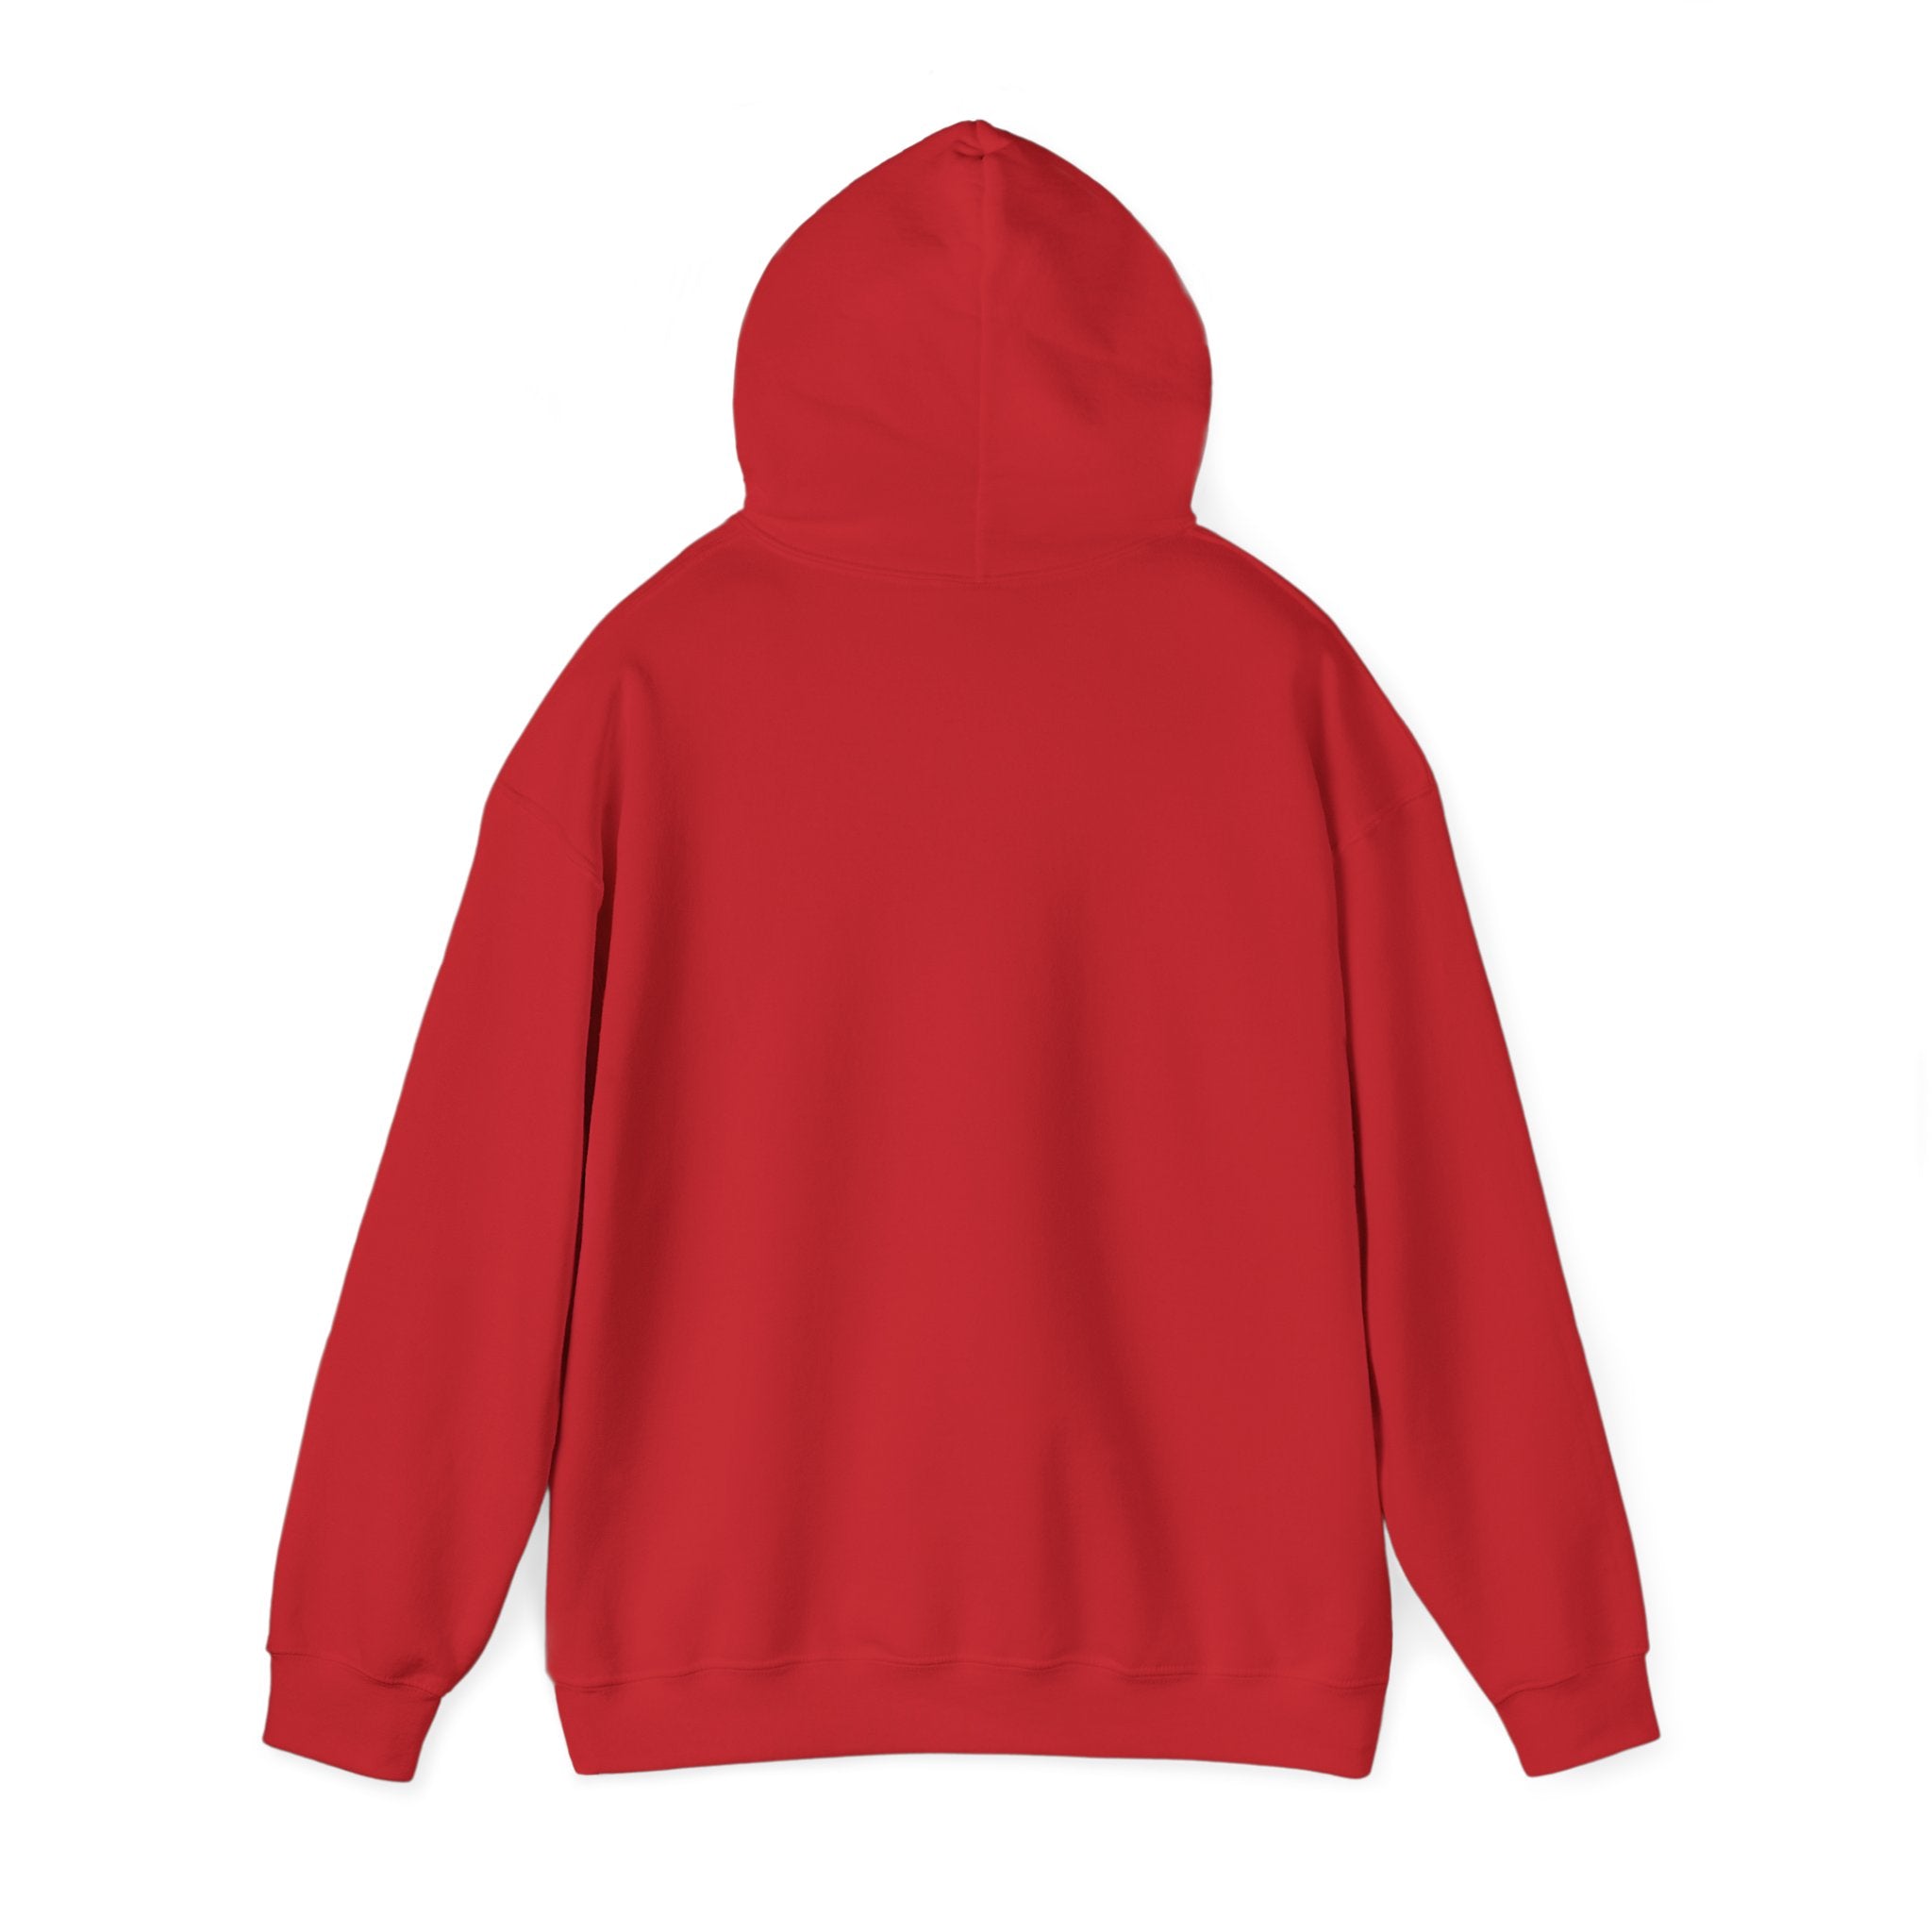 Developer Periodic Table - Hooded Sweatshirt